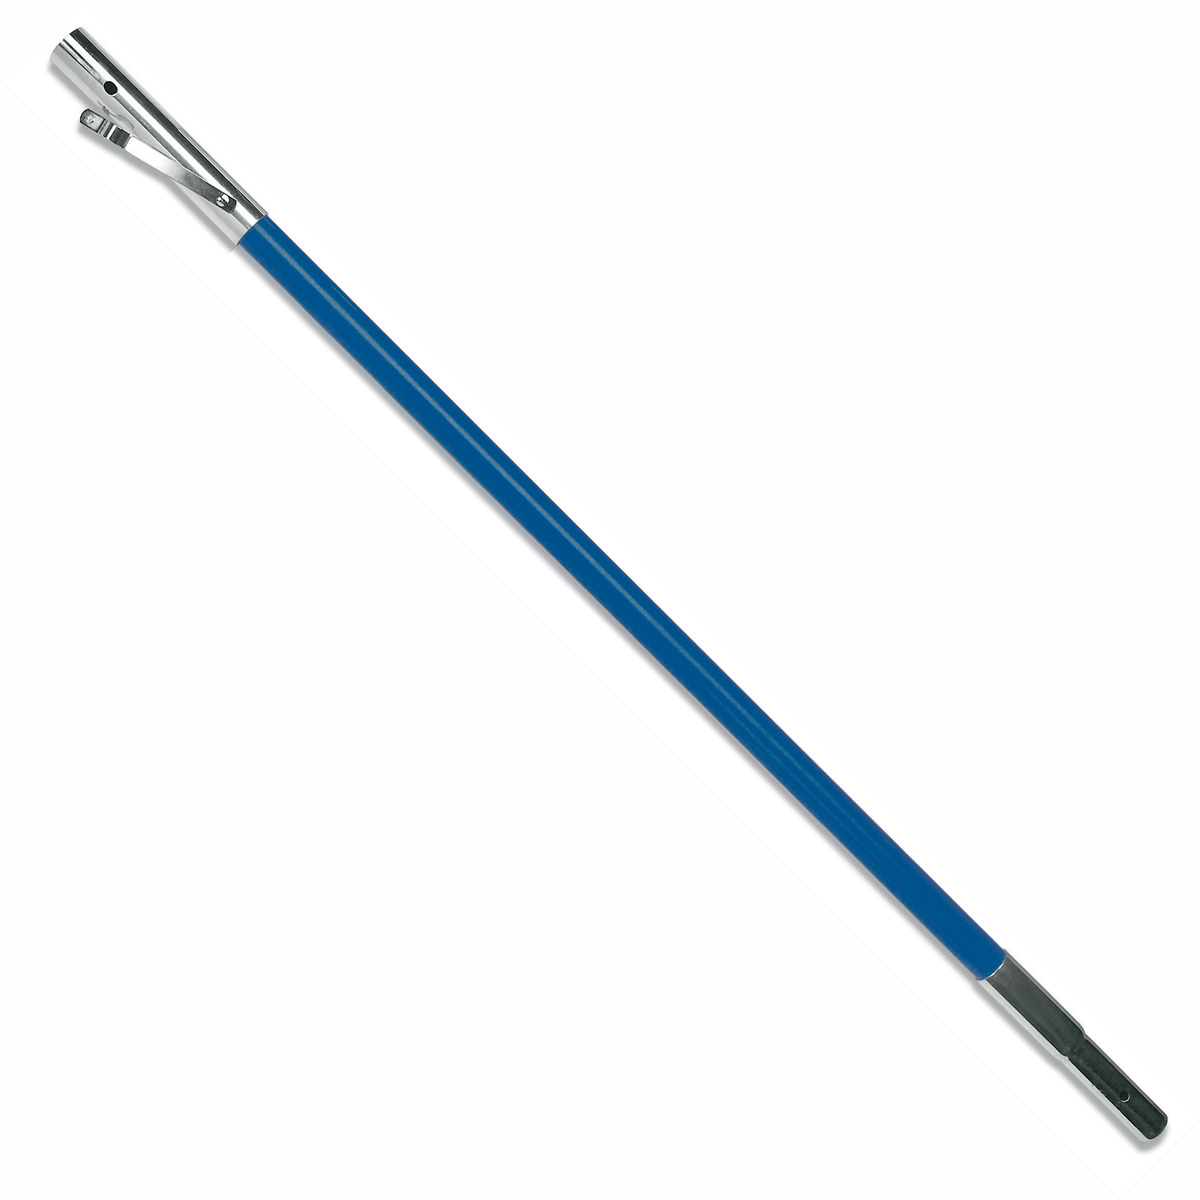 Stein 120cm Fibreglass Pole